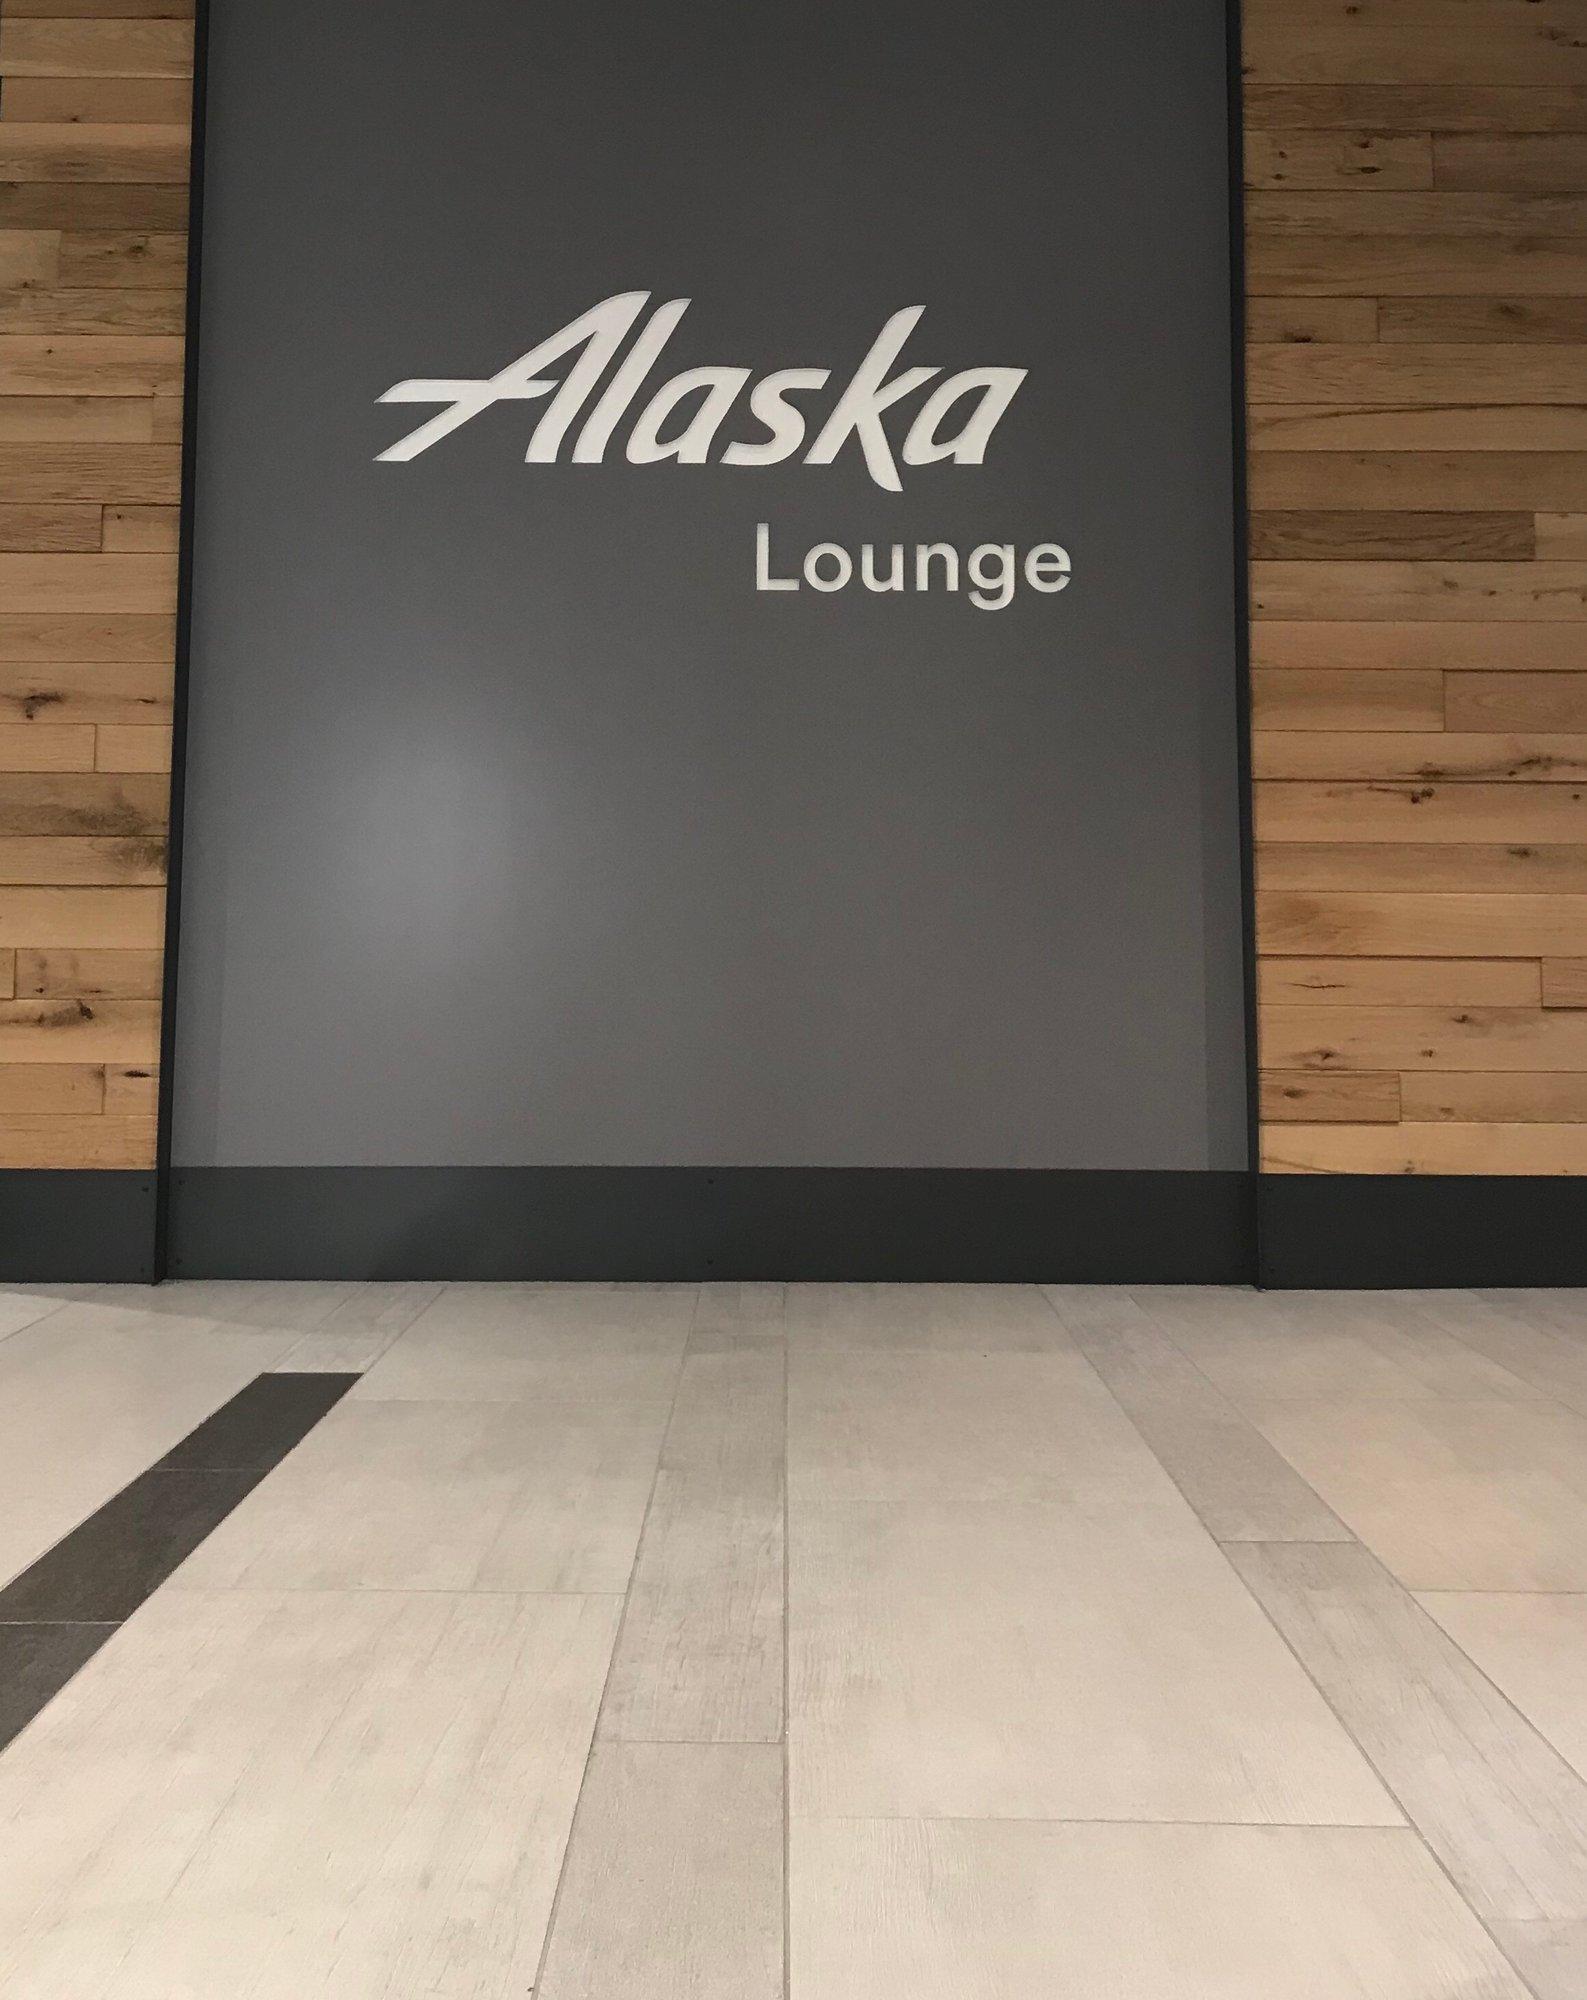 Alaska Airlines Alaska Lounge image 11 of 36